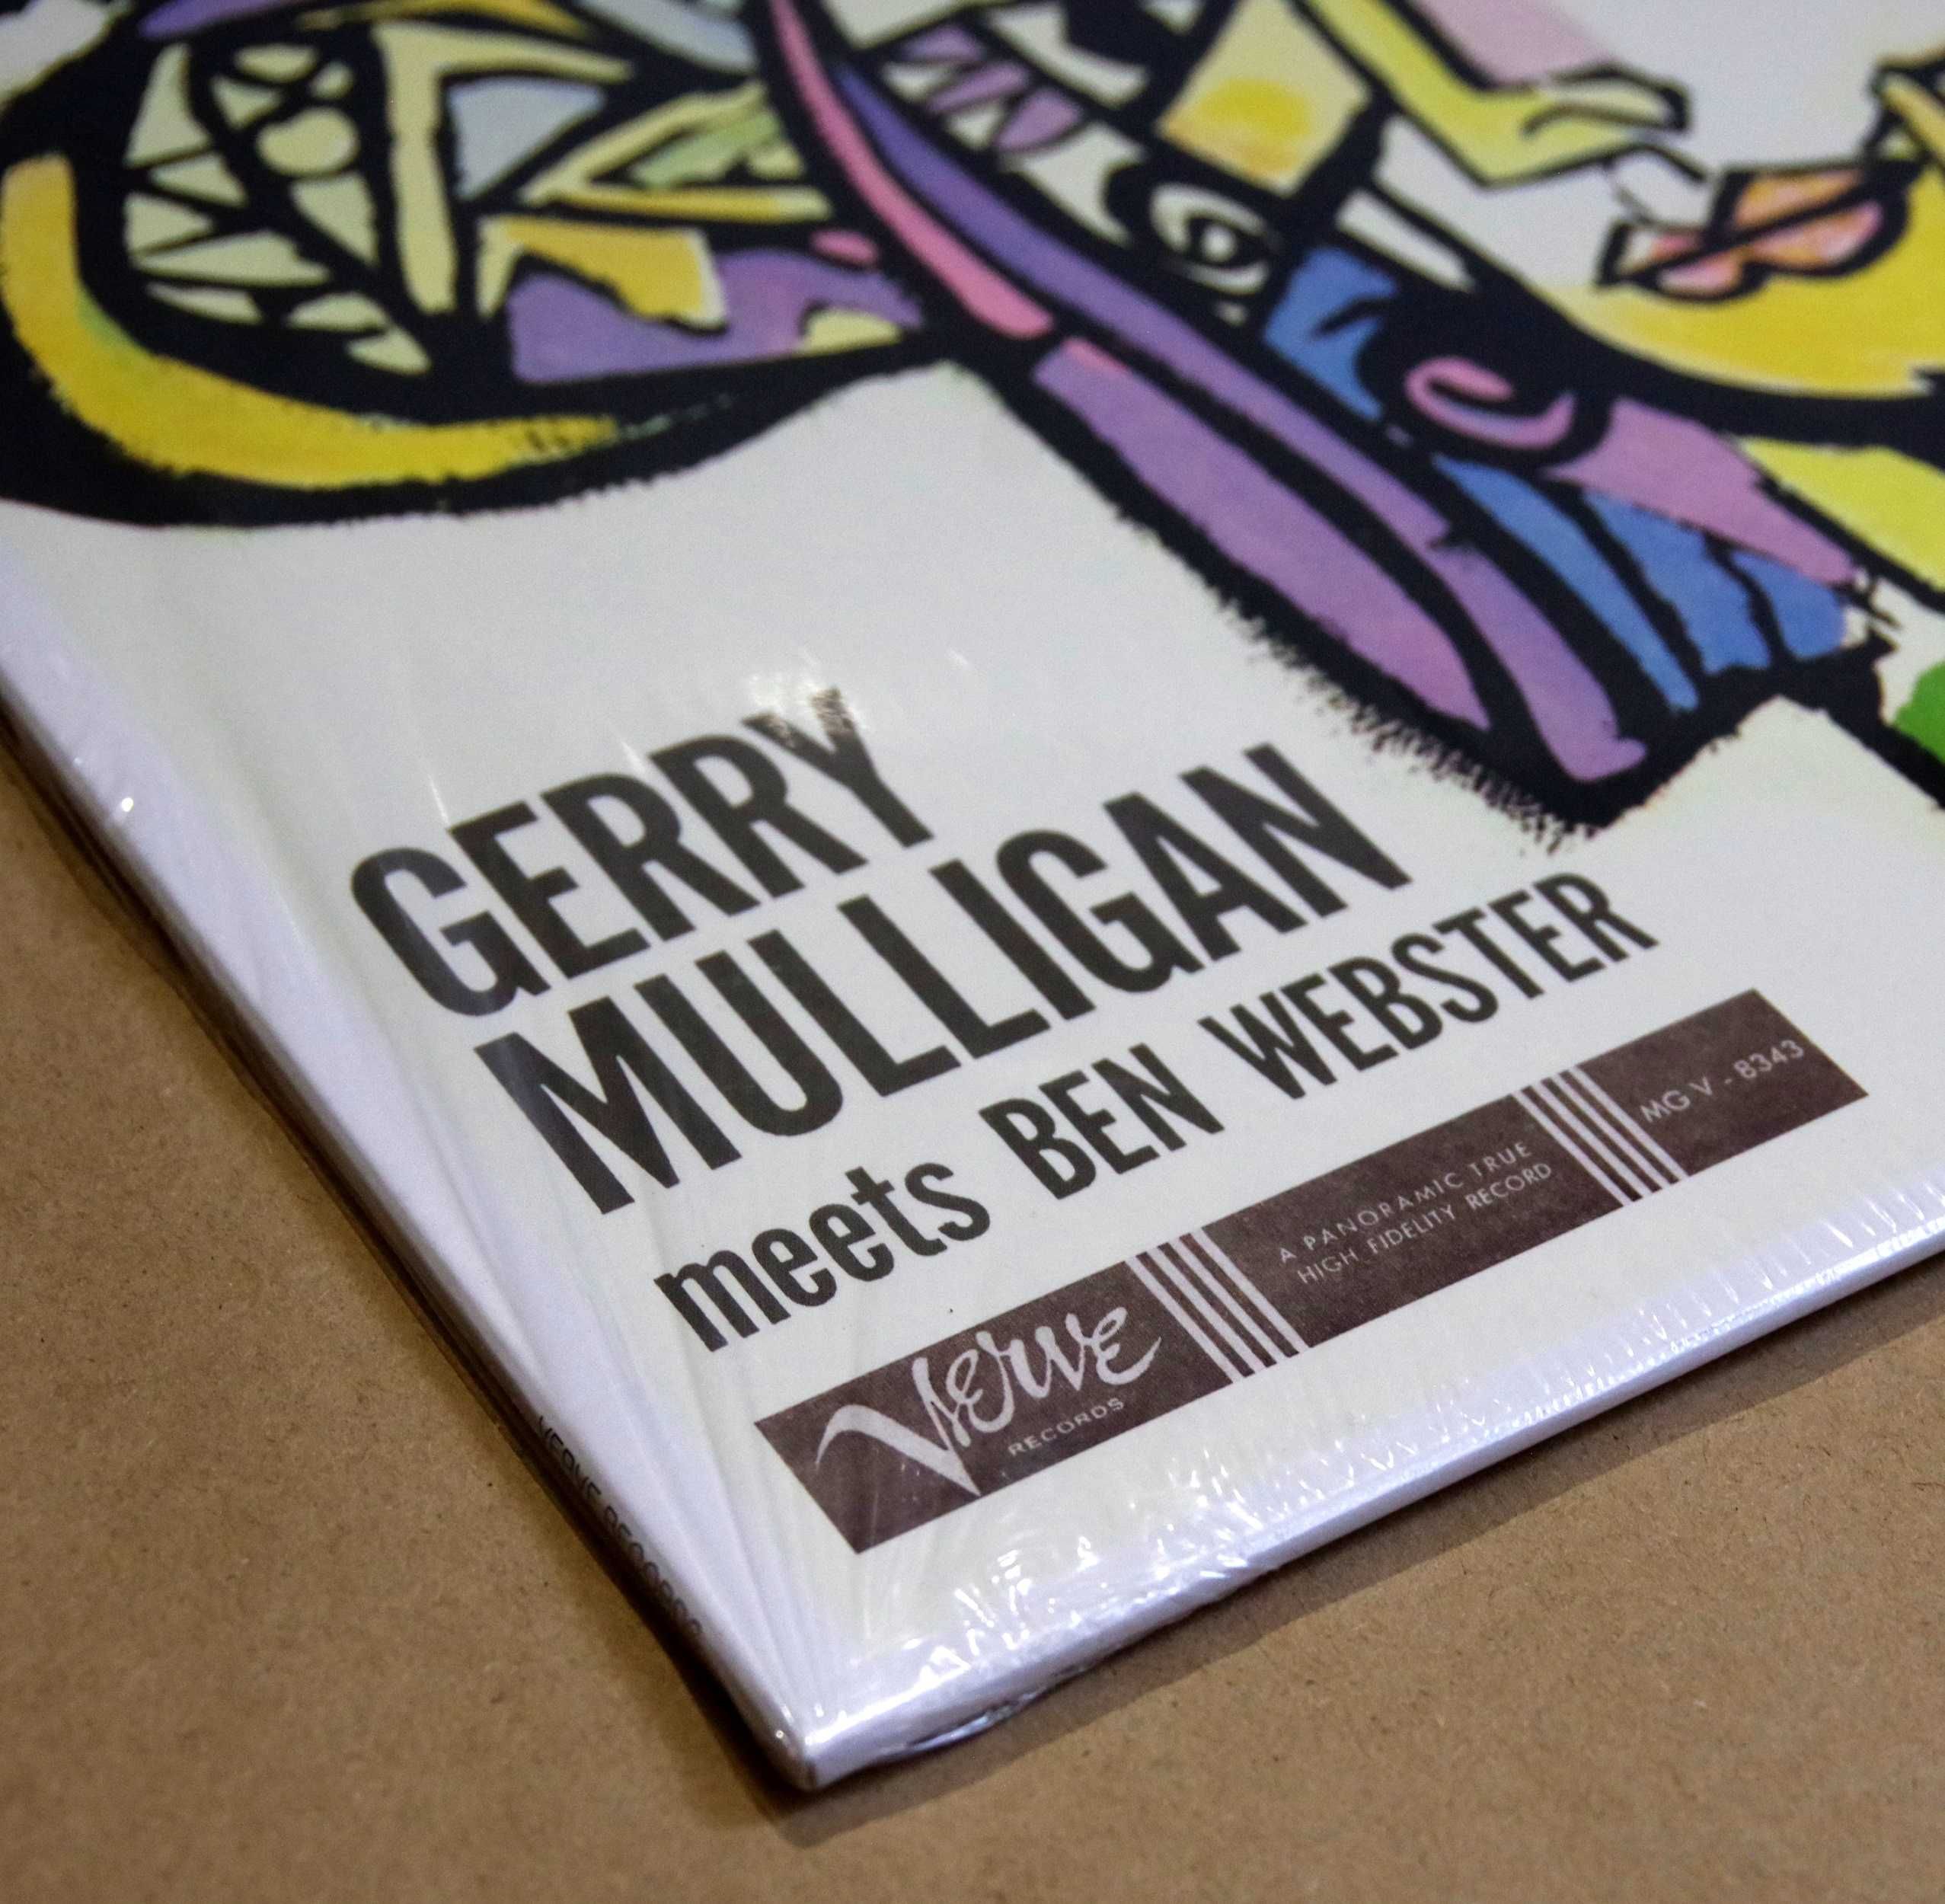 Gerry Mulligan Meets Ben Webster  LP 2019 Verve